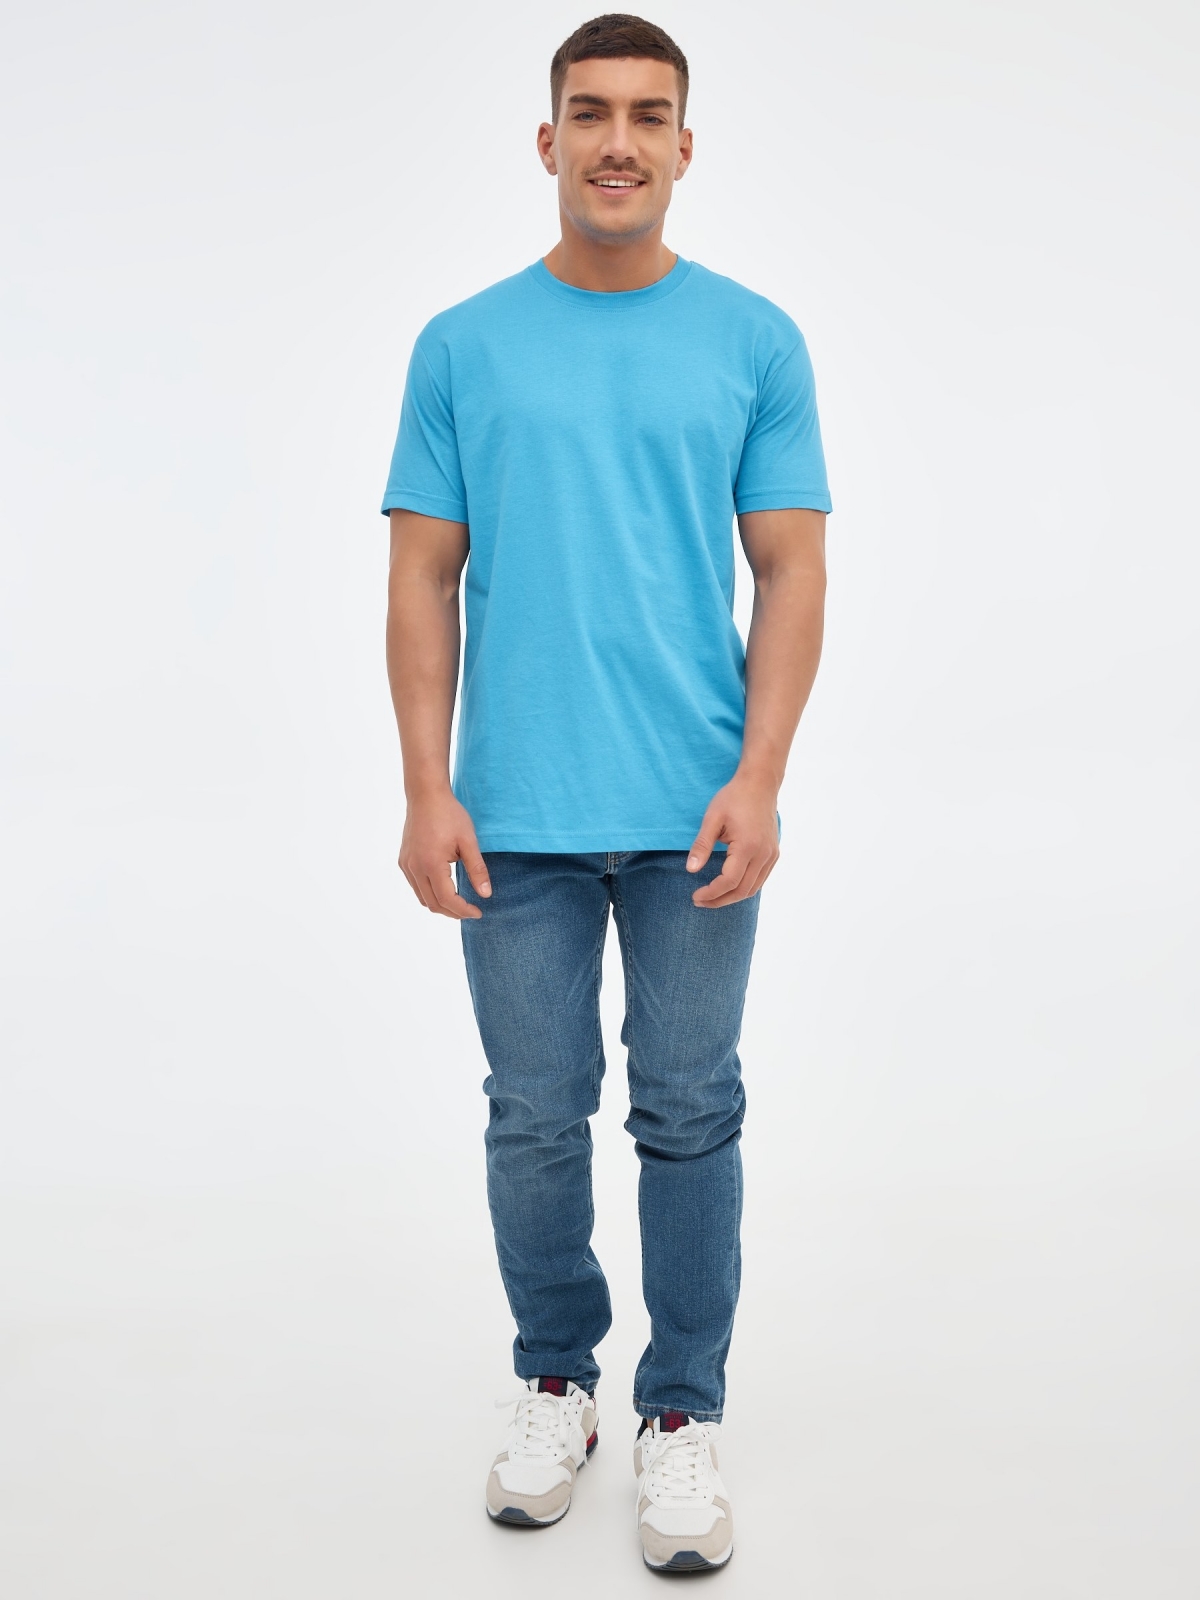 Camiseta básica manga corta azul claro vista general frontal